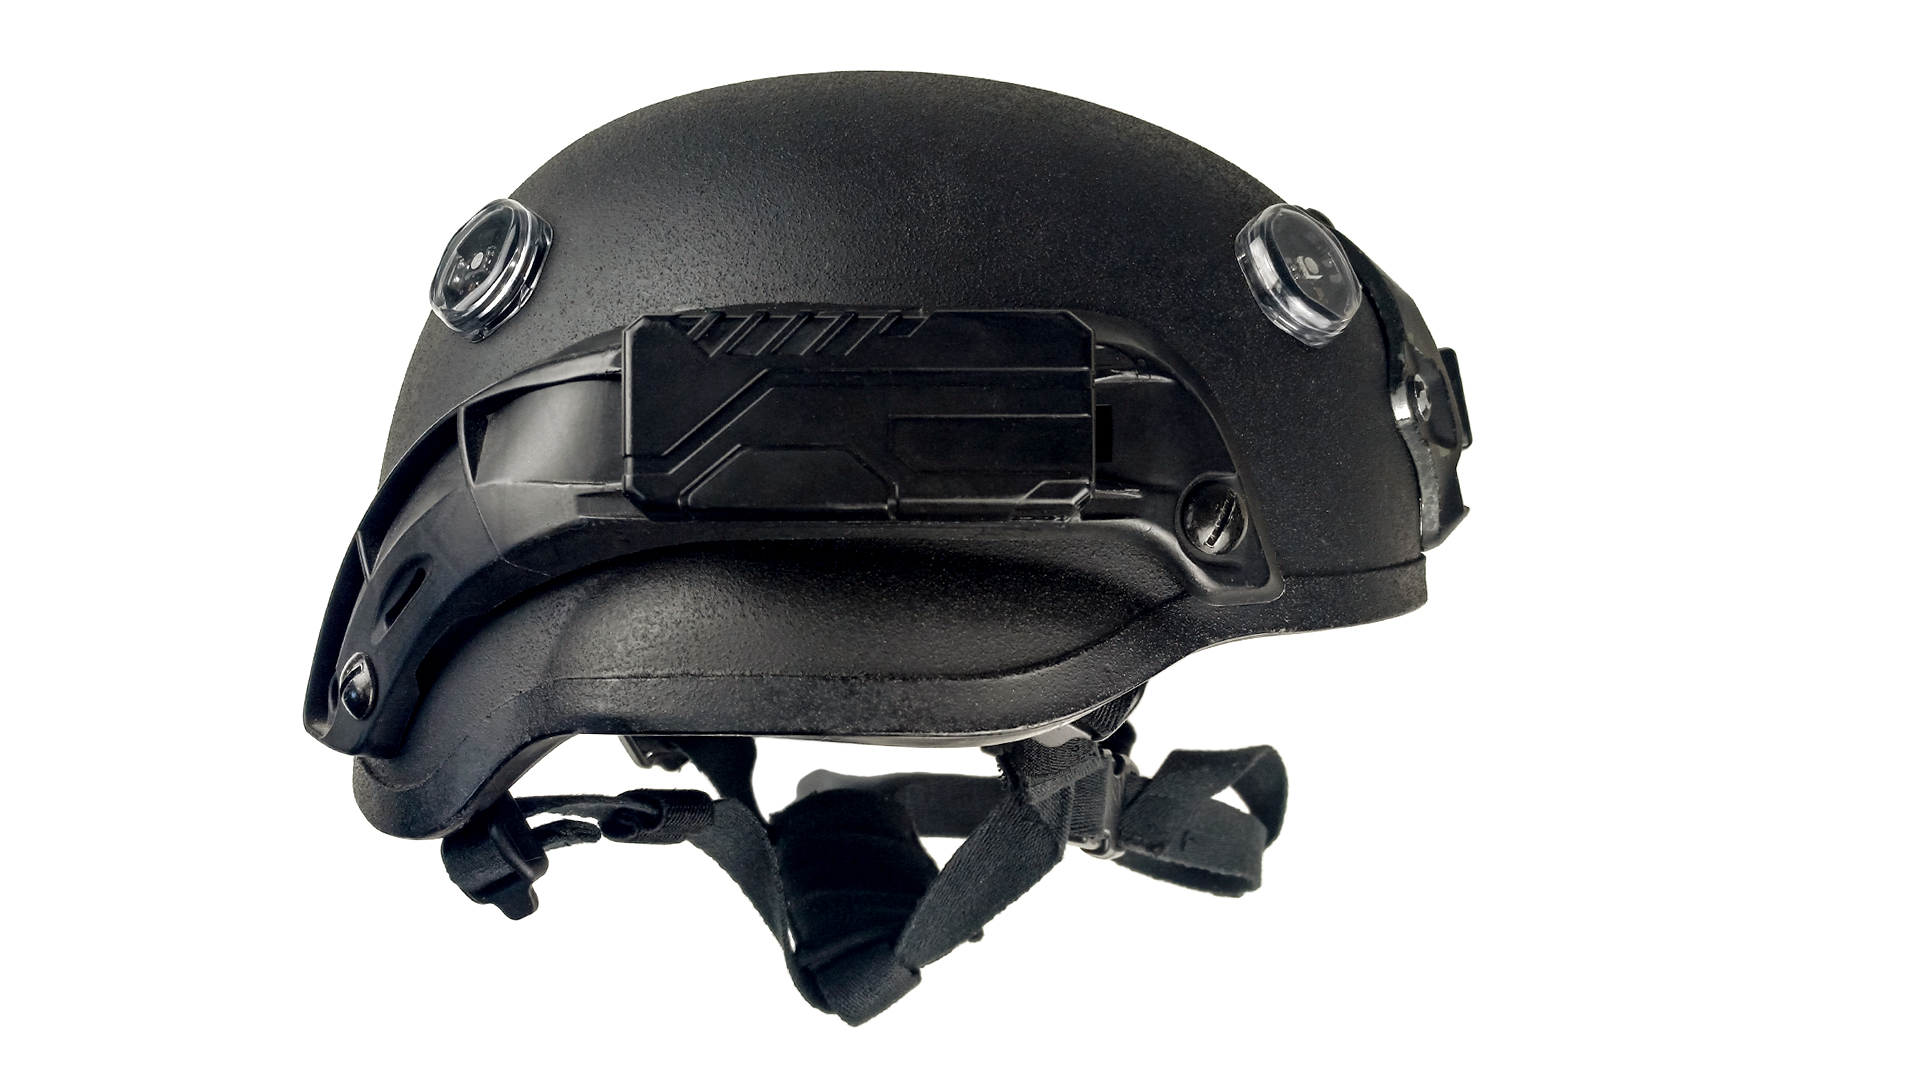 Alphatag tactical Ops-Core helmet photo 1